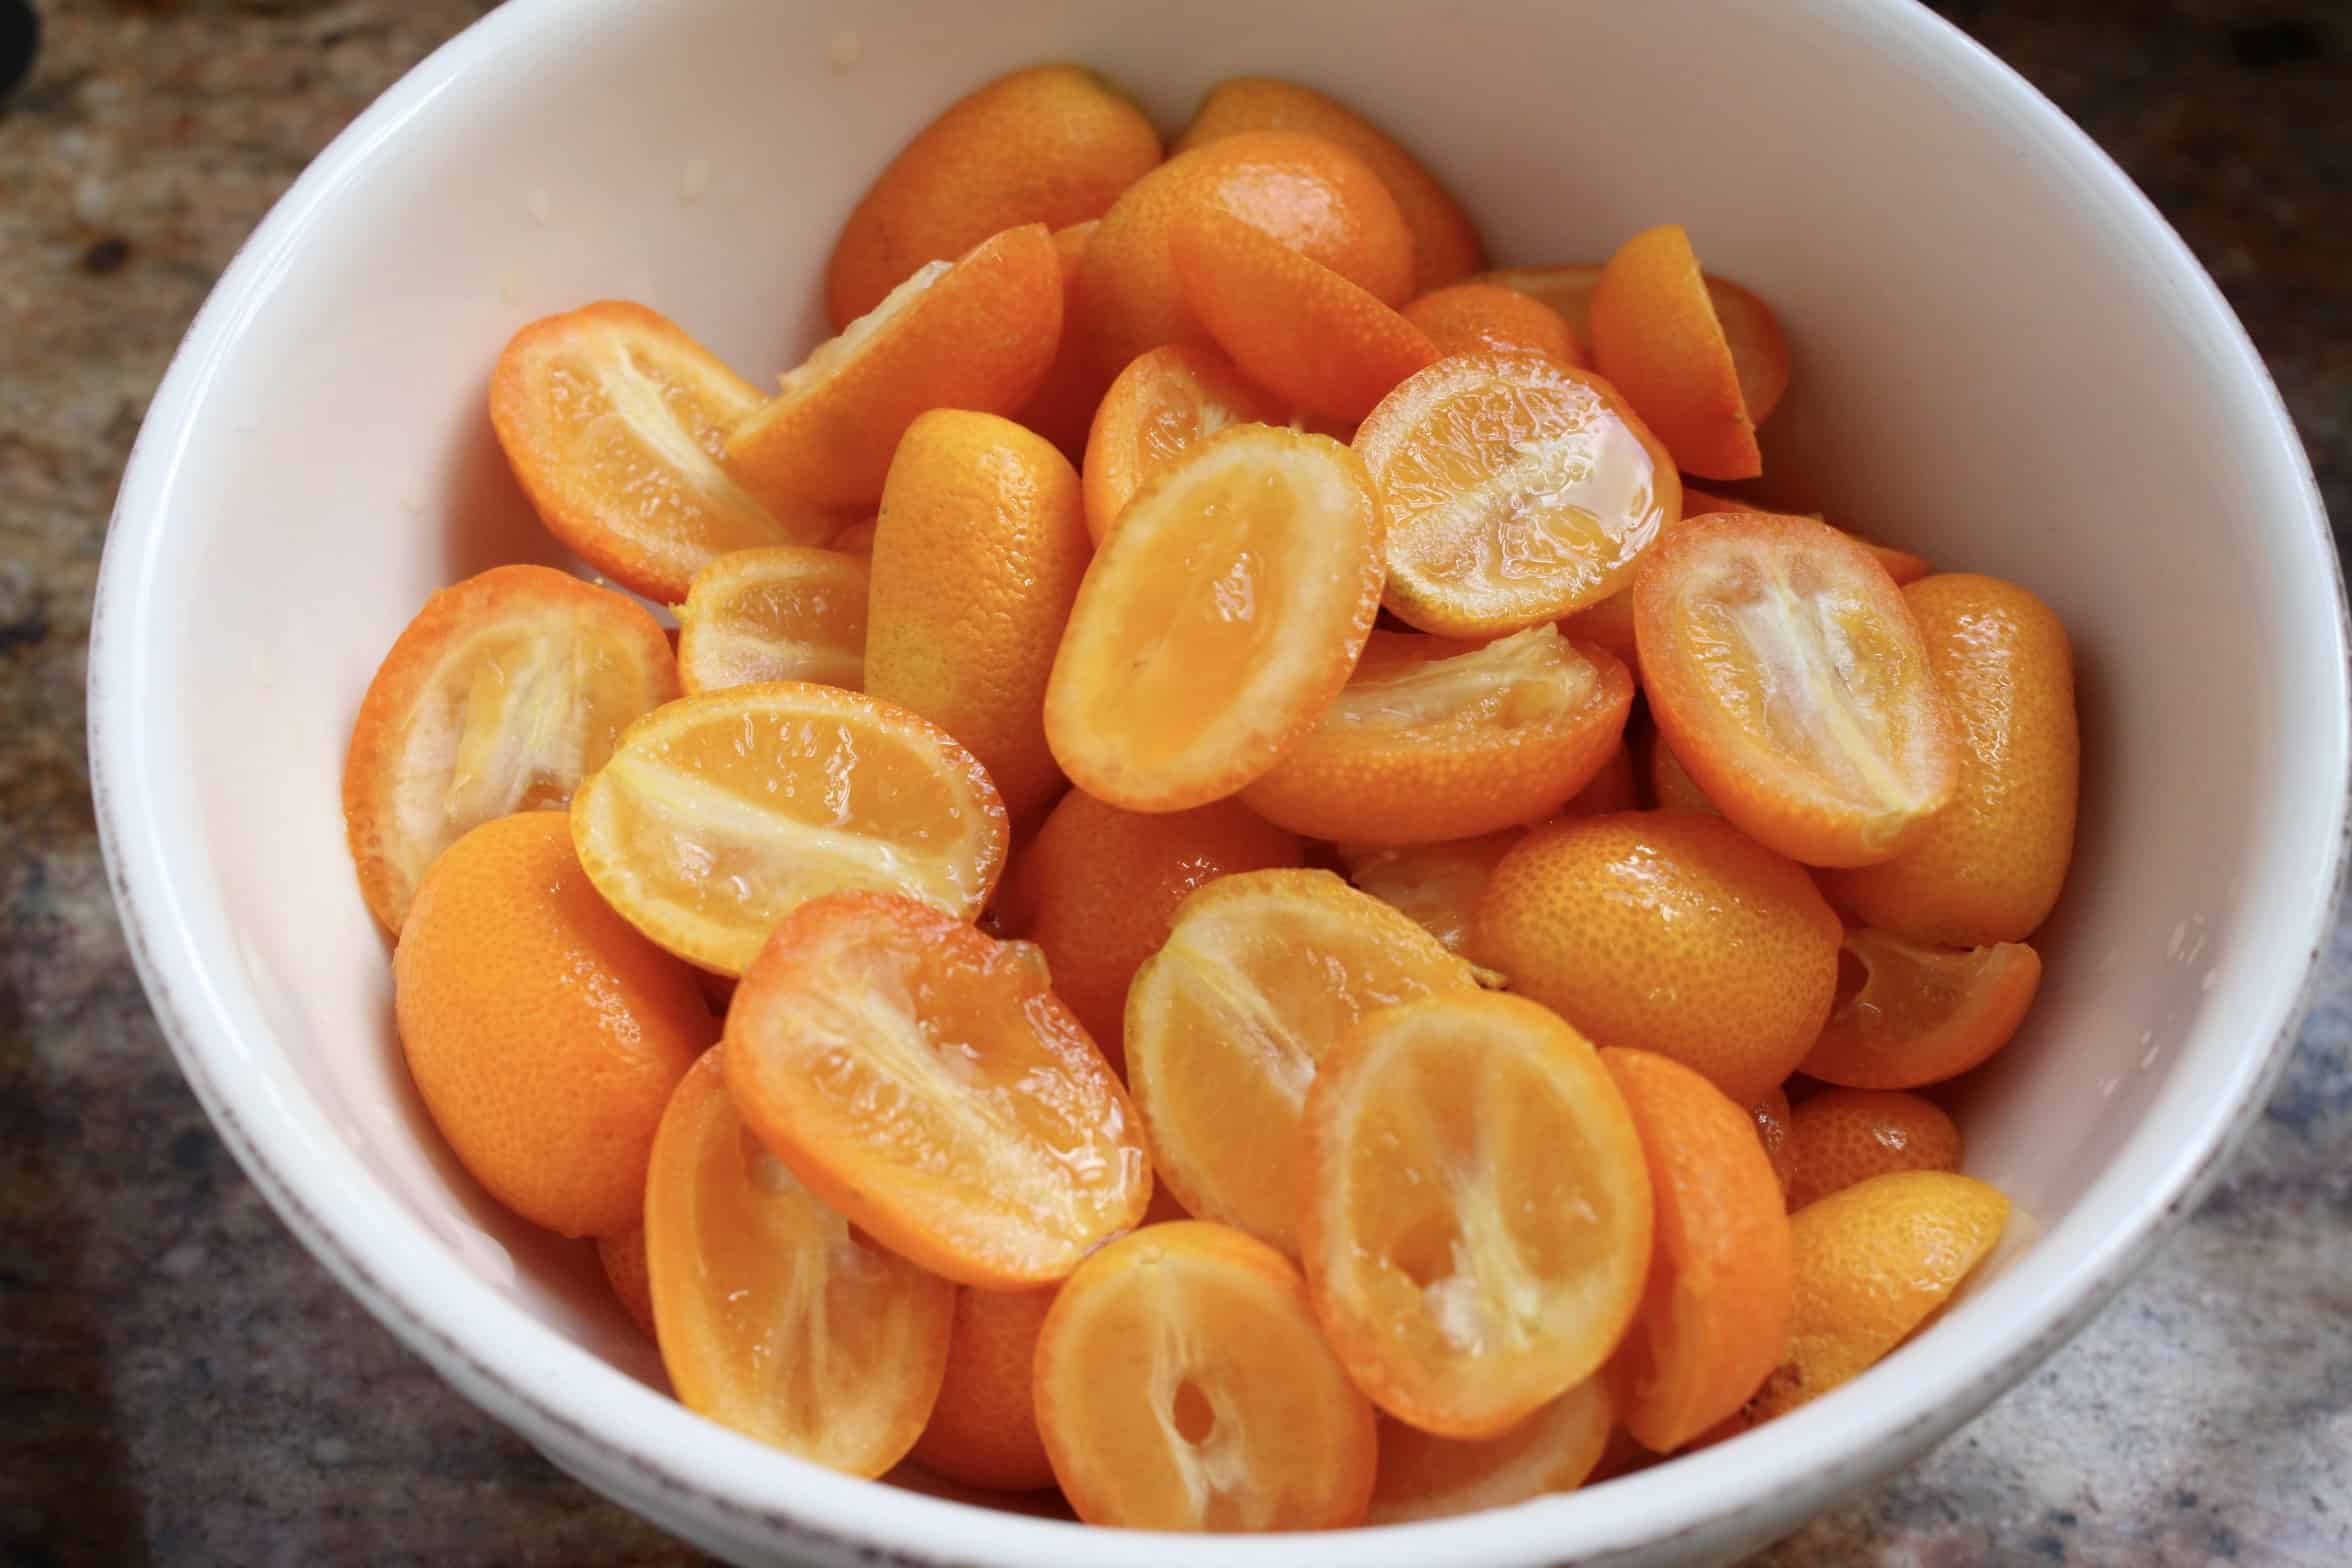 kumquats with seeds removed